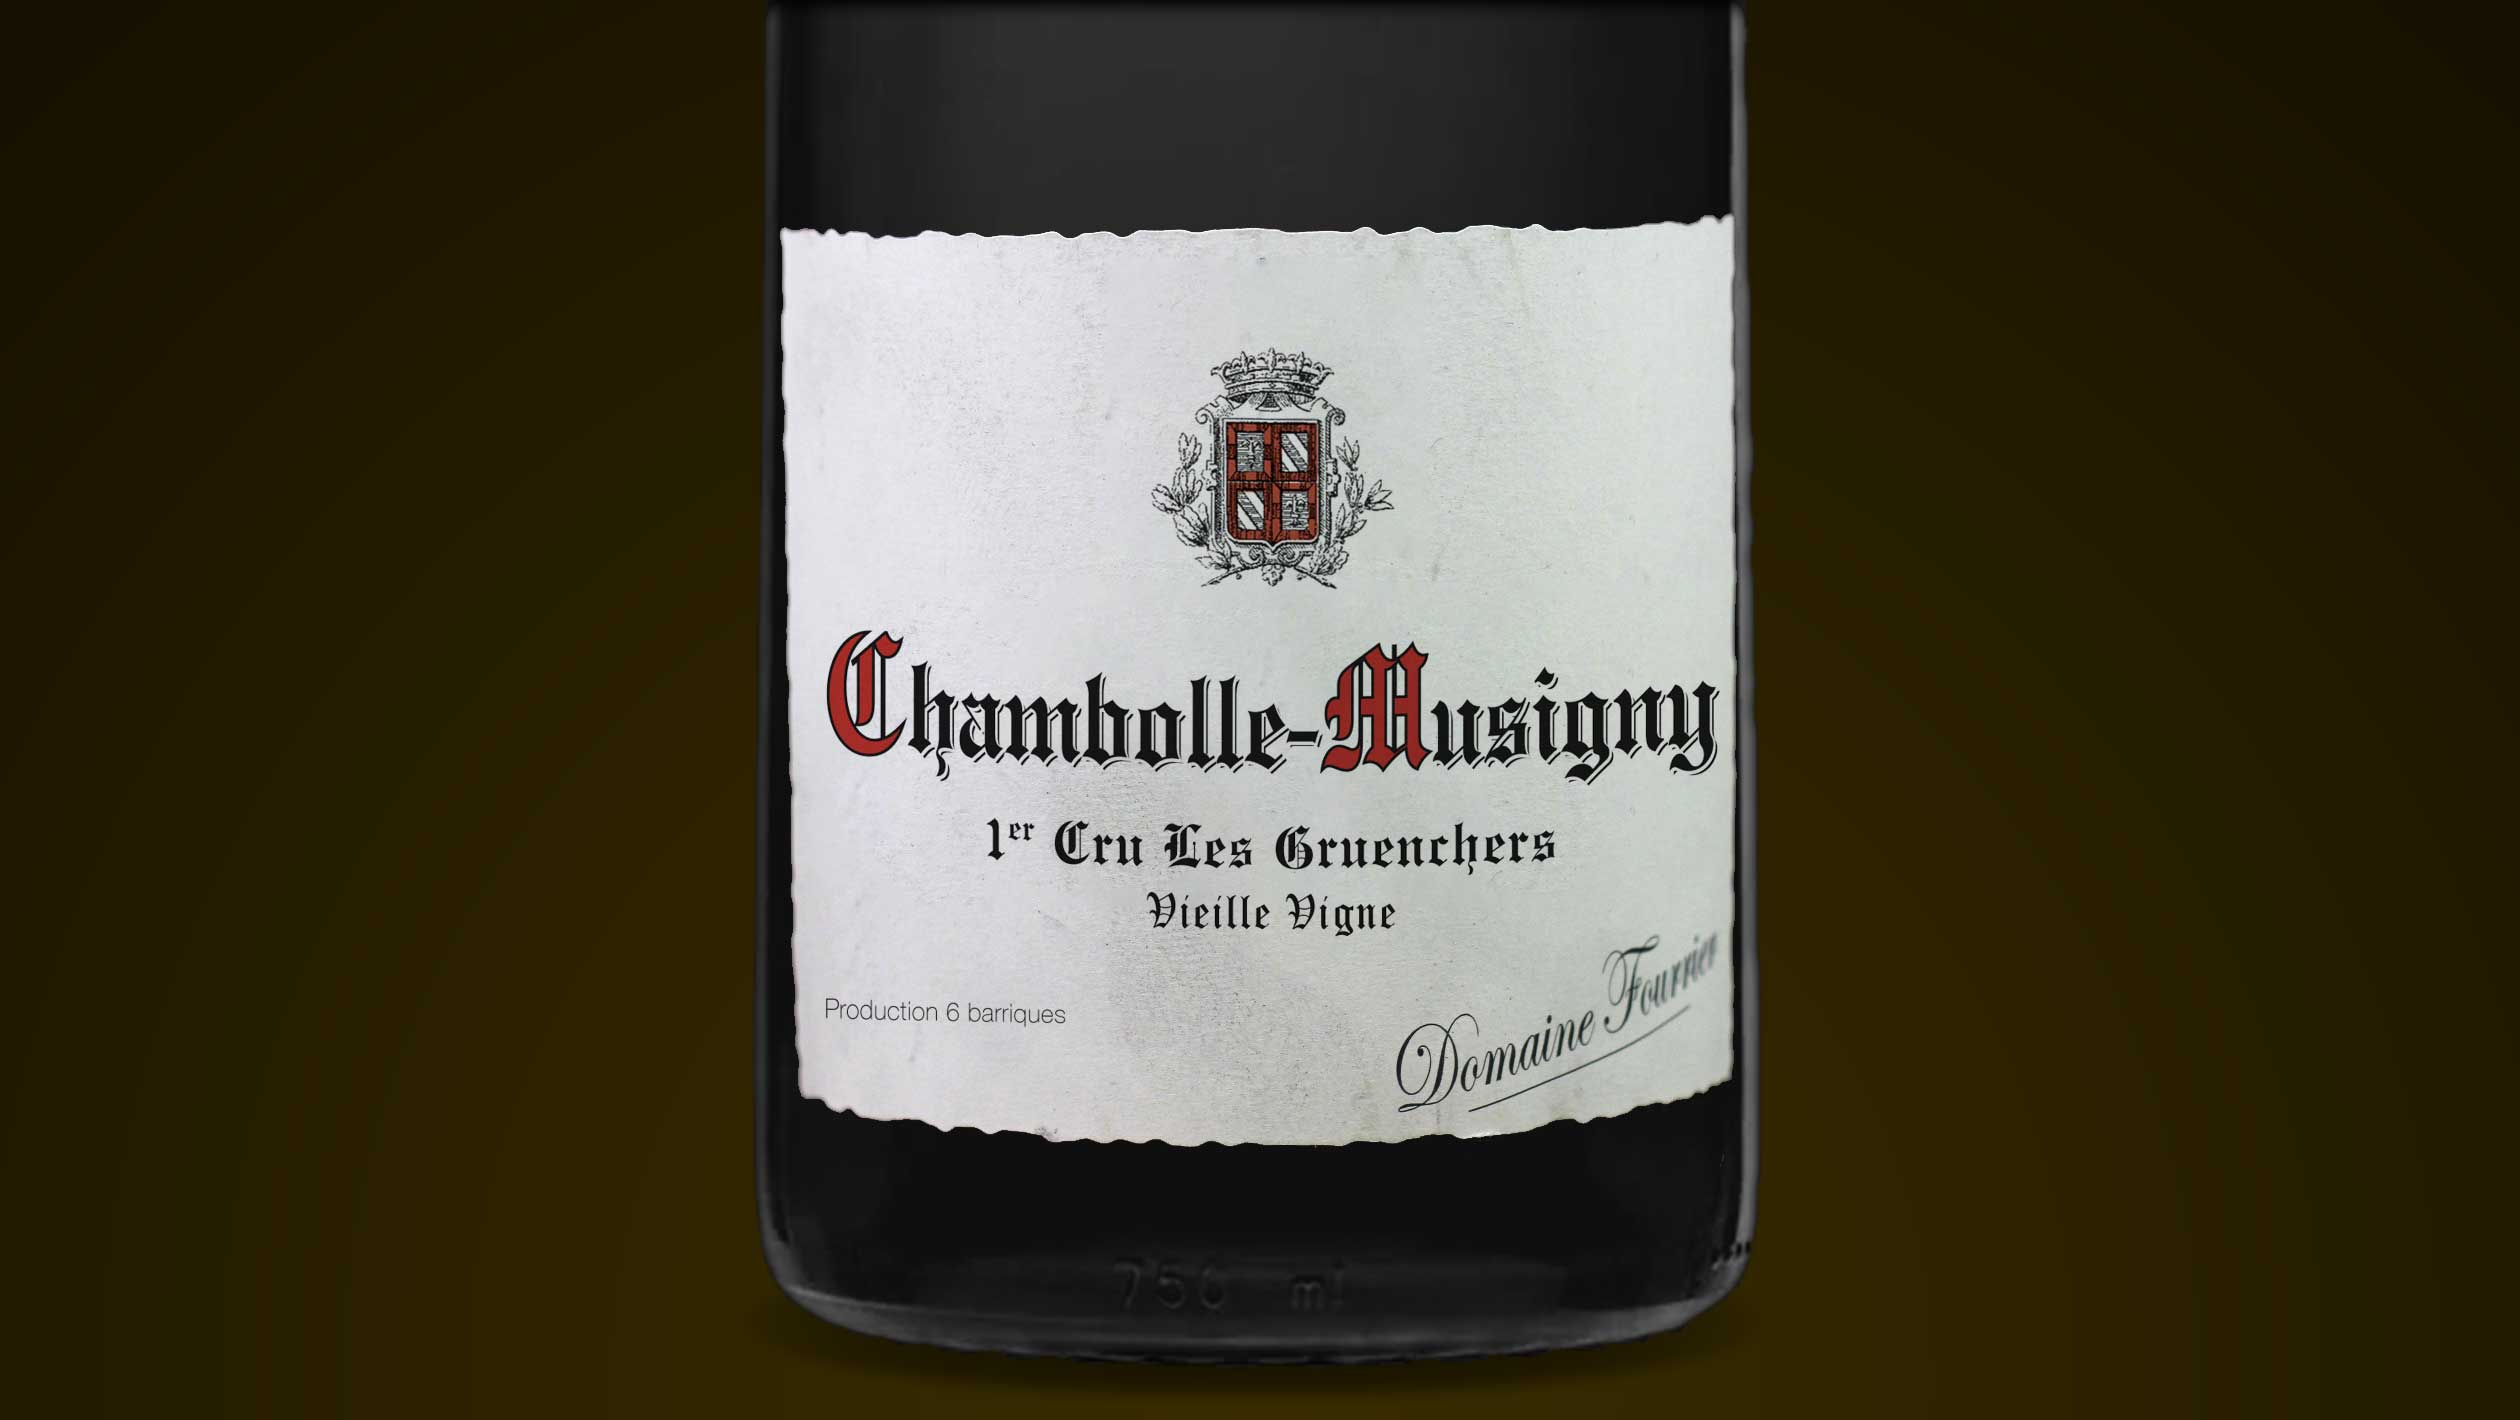 Domaine Fourrier Chambolle-Musigny 1er Cru ‘Les Gruenchers’ Vieilles Vignes 2007